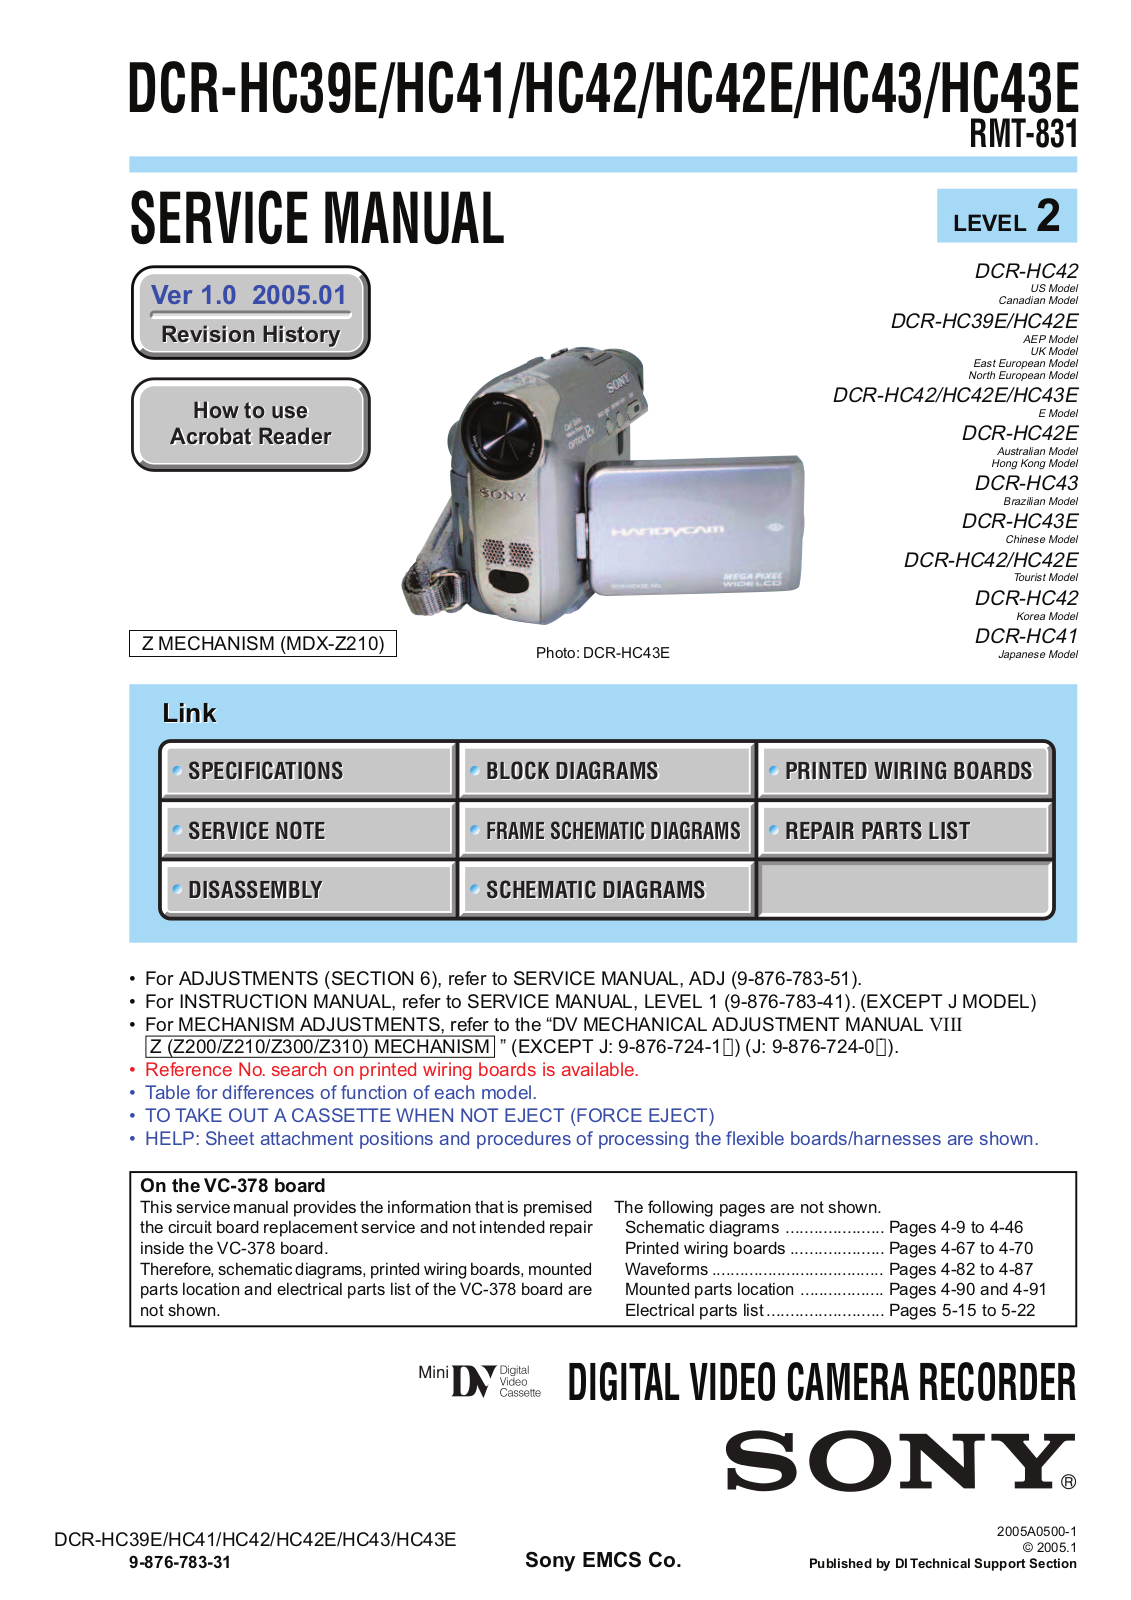 Sony RMT-831, DCR-HC43E, DCR-HC43, DCR-HC42E, DCR-HC42 Service Manual